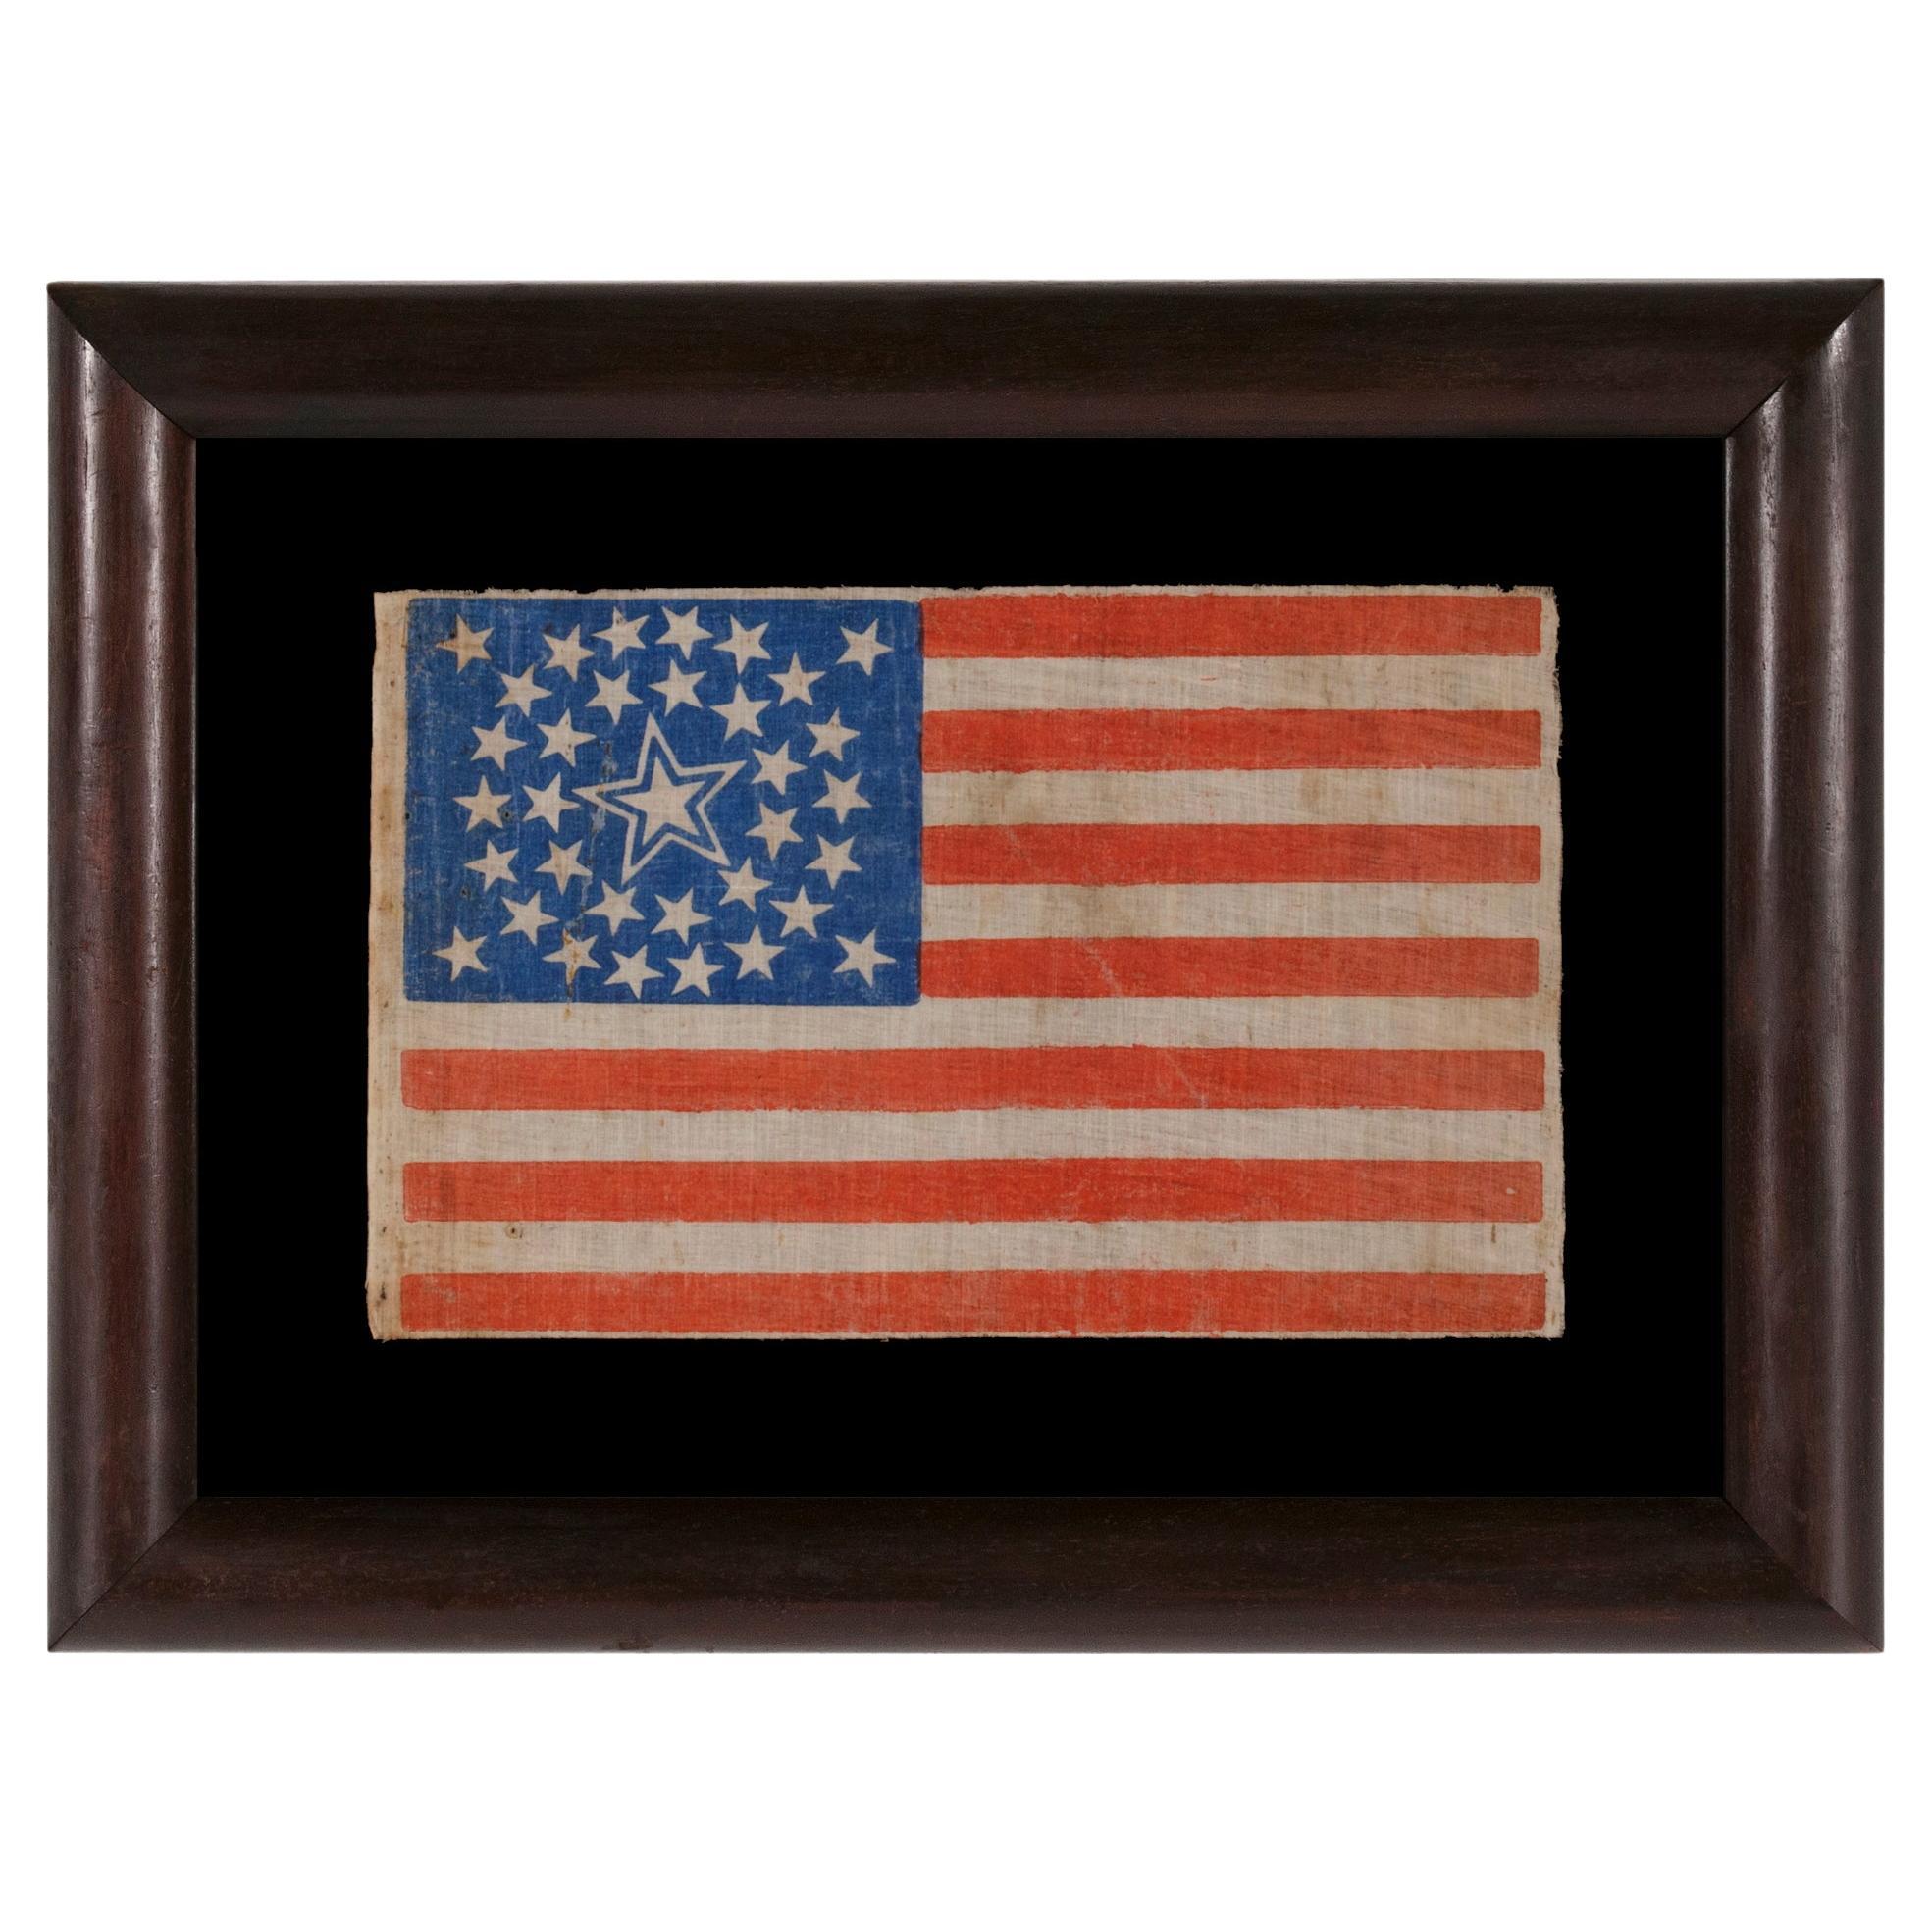 34 Star Antique American Parade Flag, Kansas Statehood, ca 1861-1863